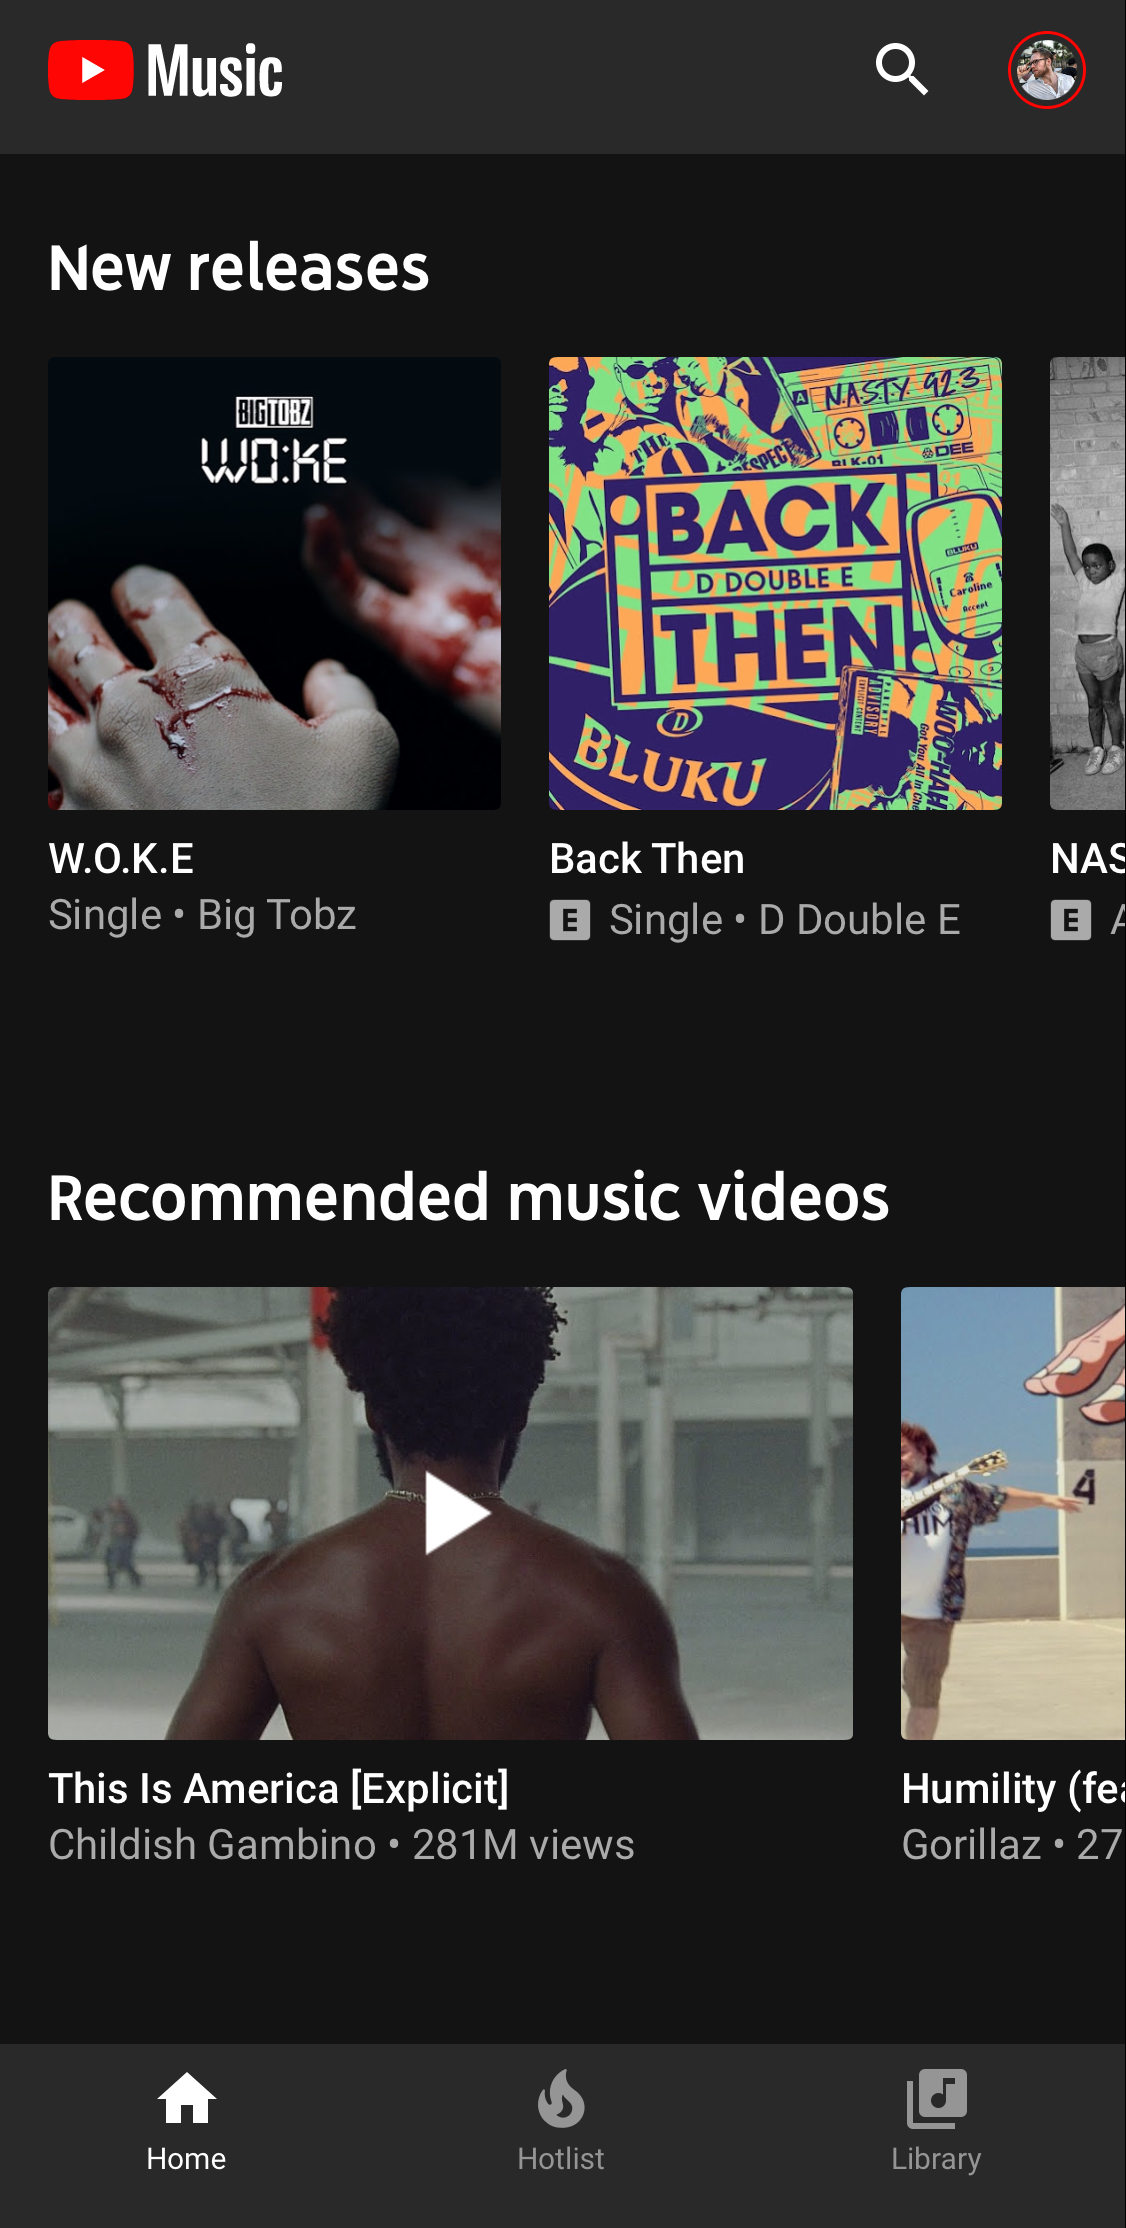 GOOGLE нацеливается на Spotify с запуском совершенно нового потокового сервиса: YouTube Music